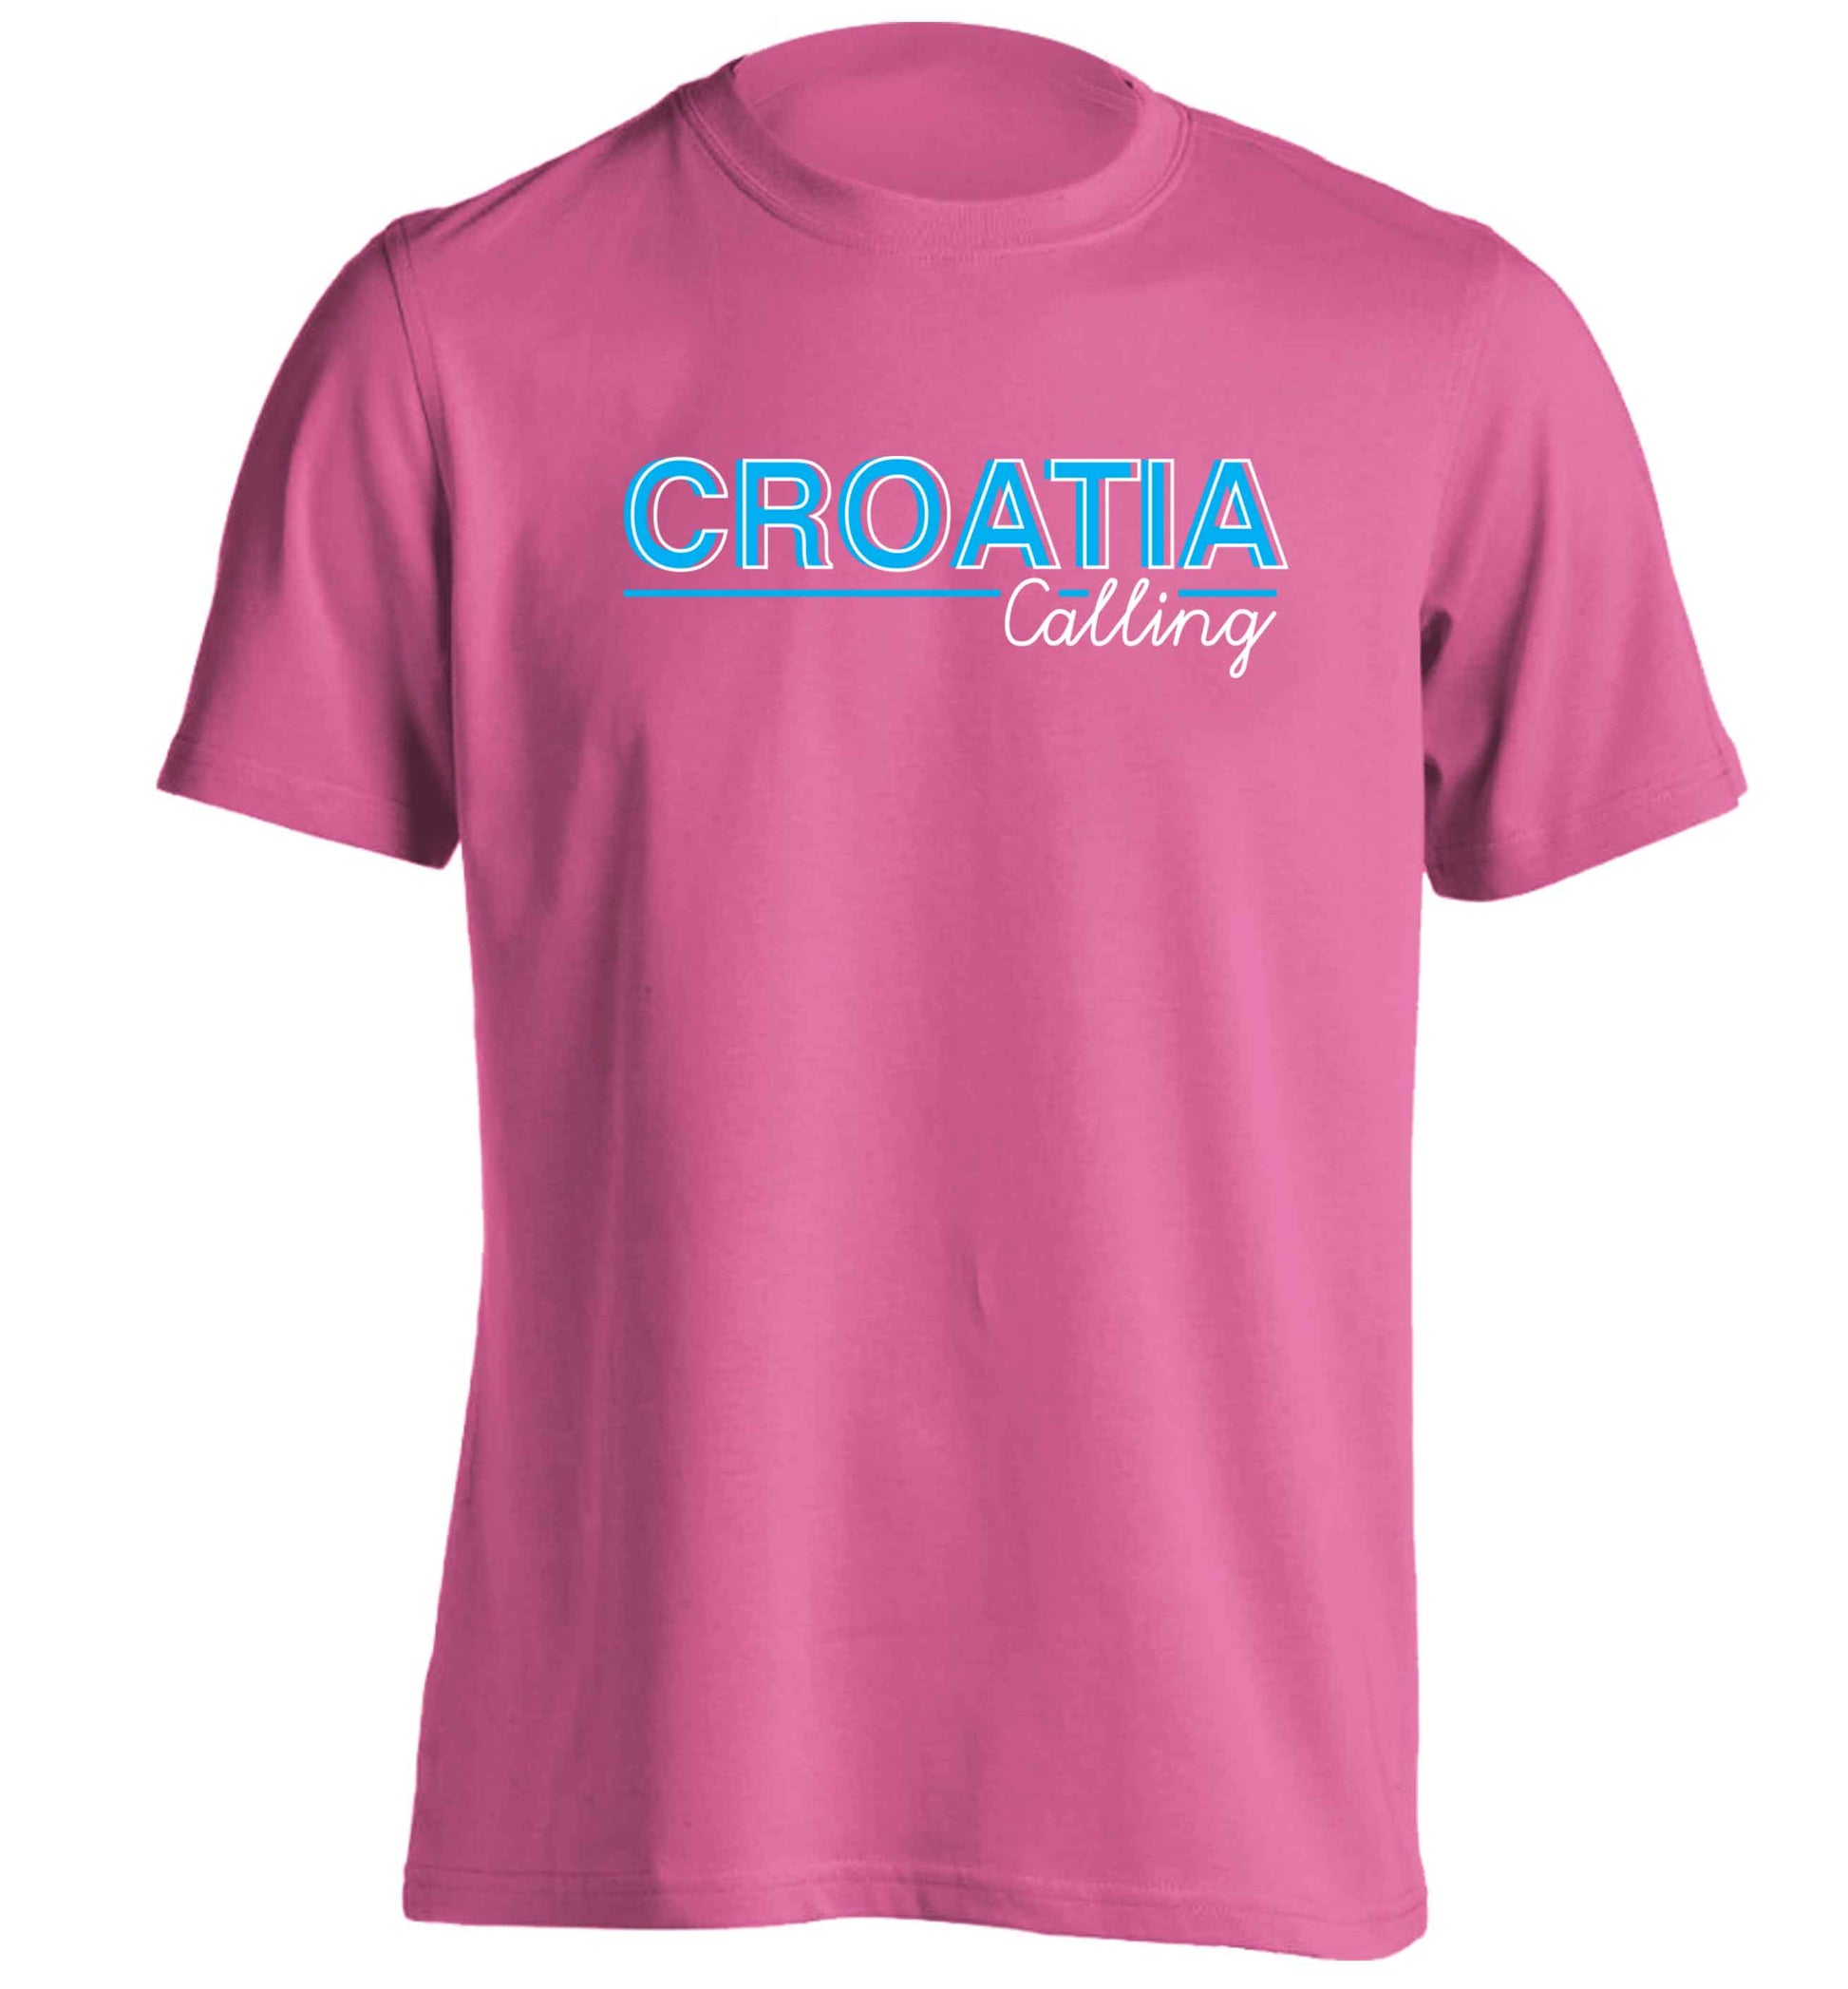 Croatia calling adults unisex pink Tshirt 2XL